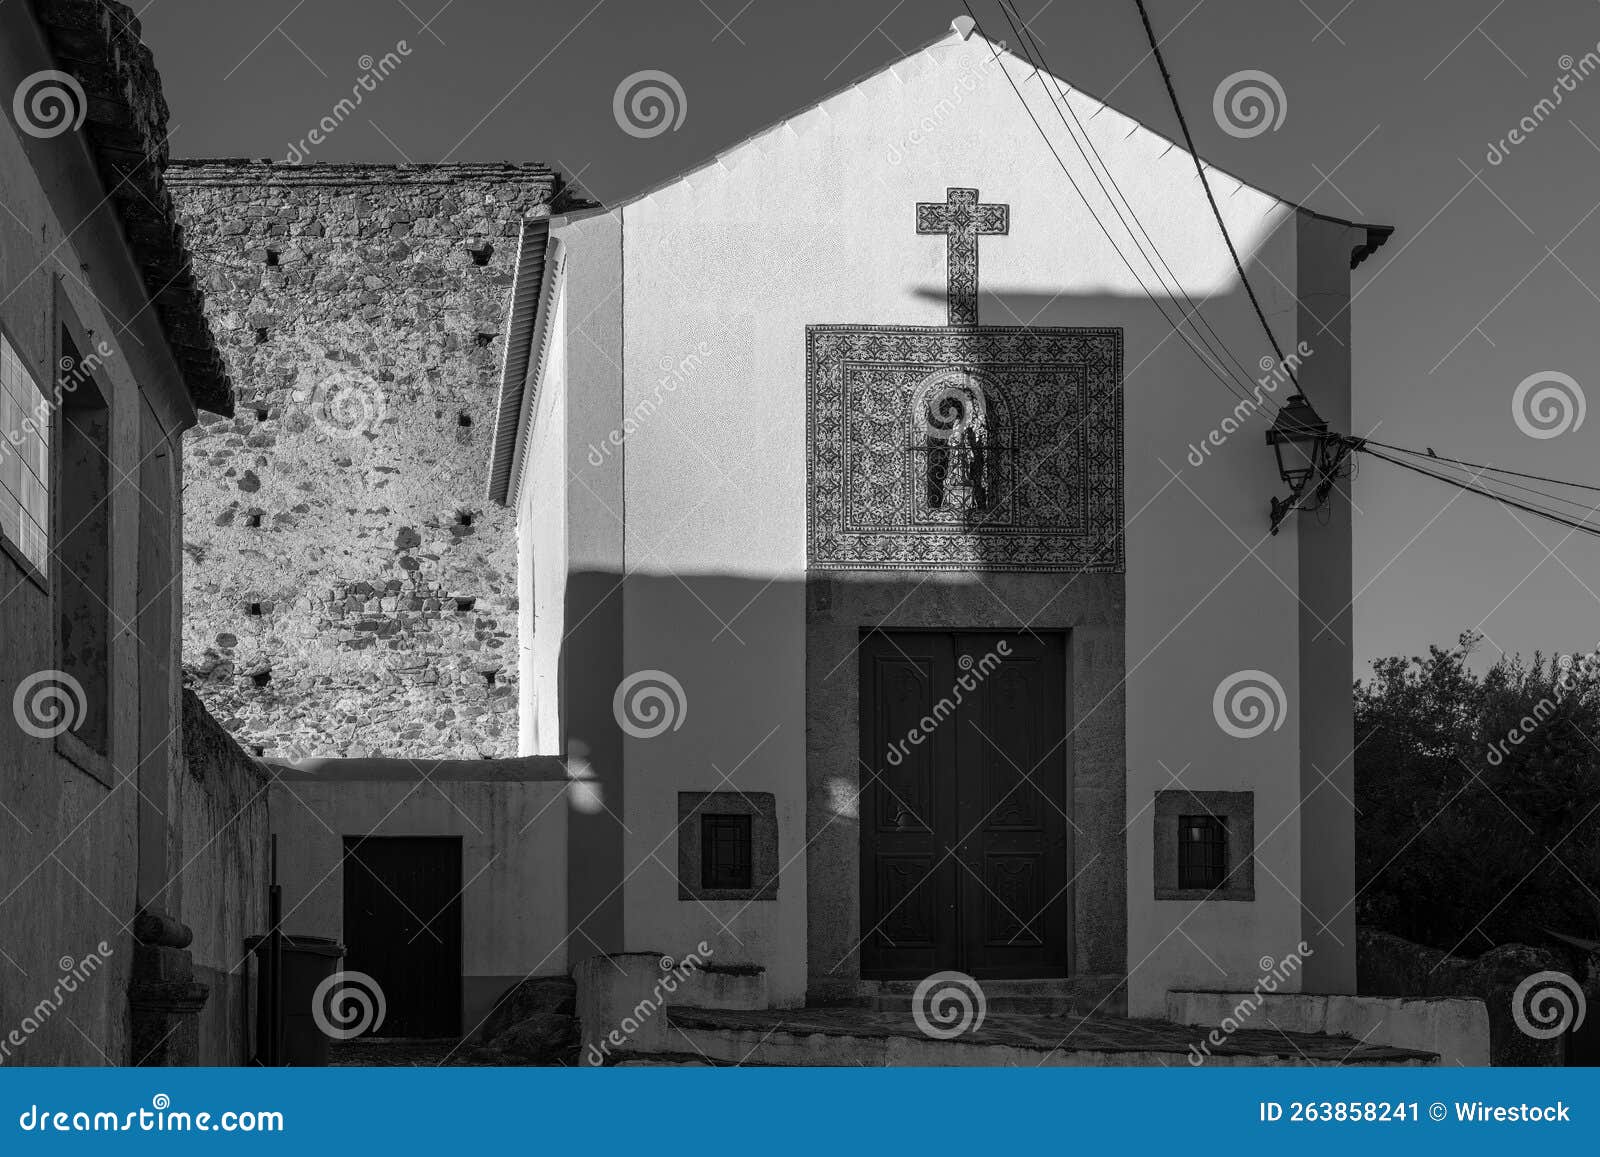 grayscale shot of the church of nossa senhora da alegria in castelo de vide, portugal